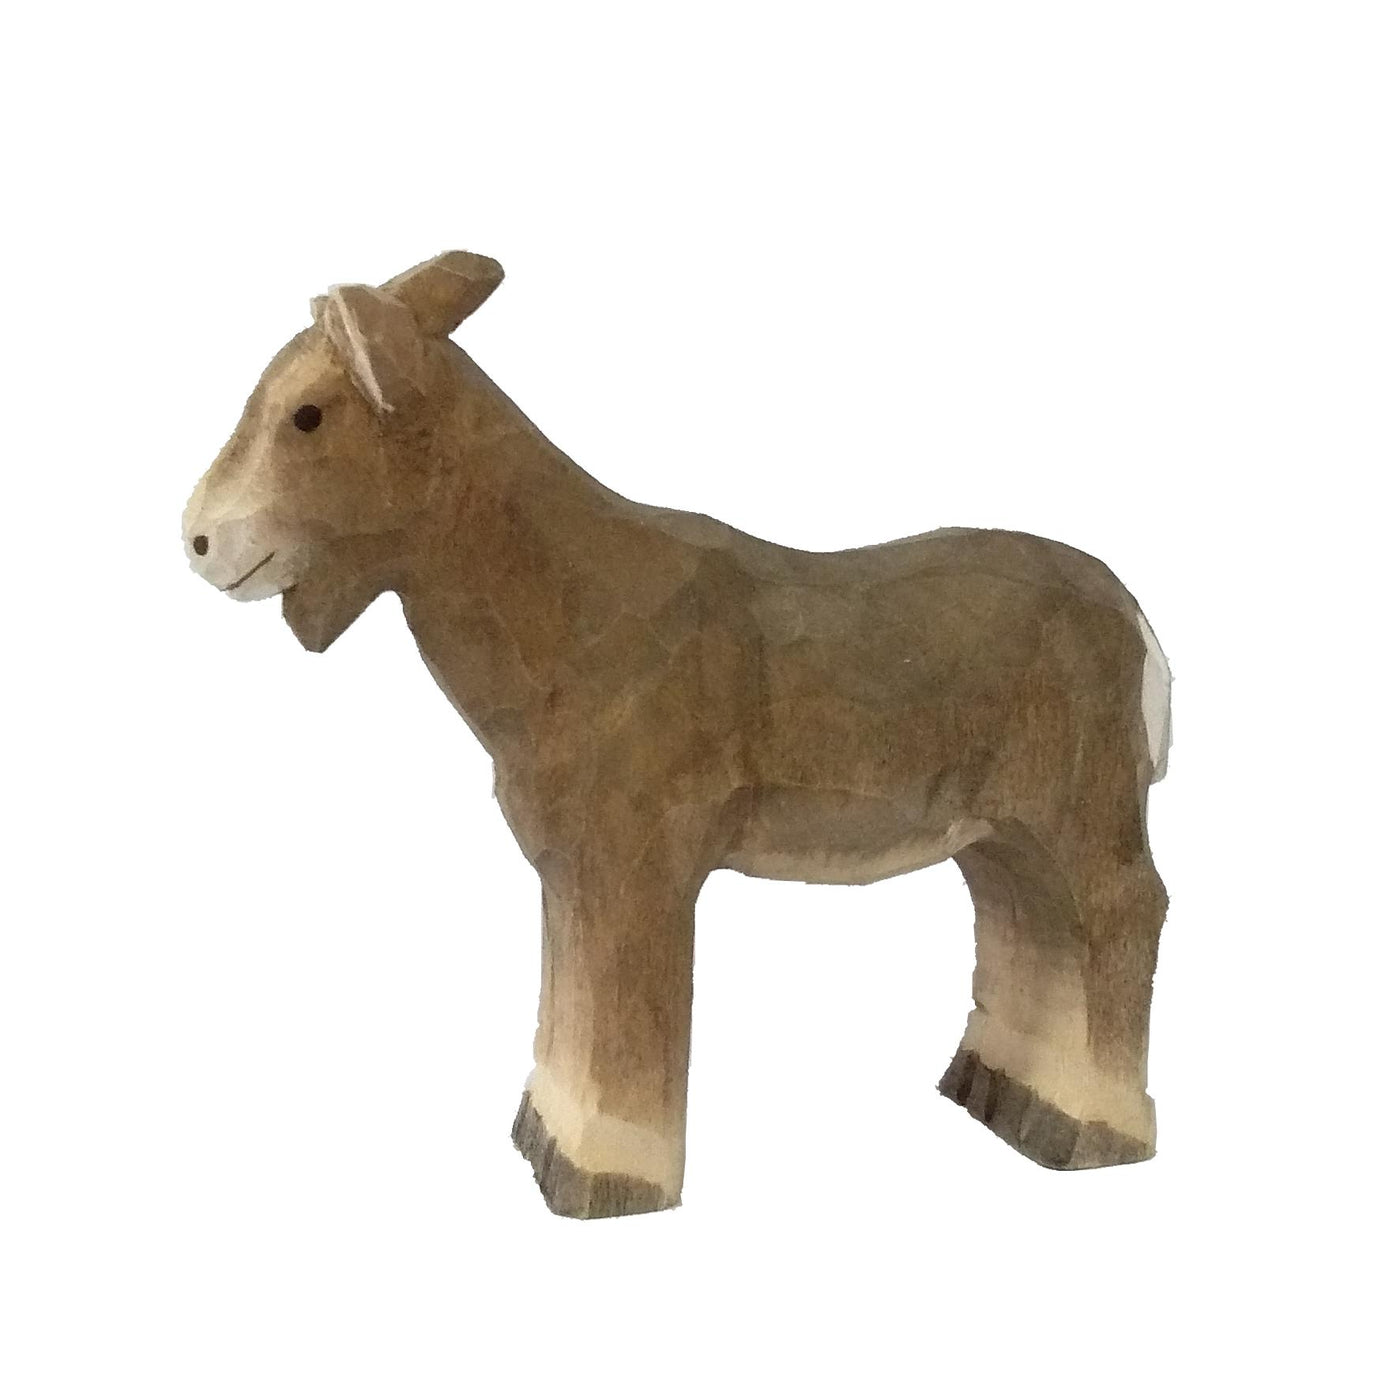 Wudimals® Wooden Goat Animal Toy